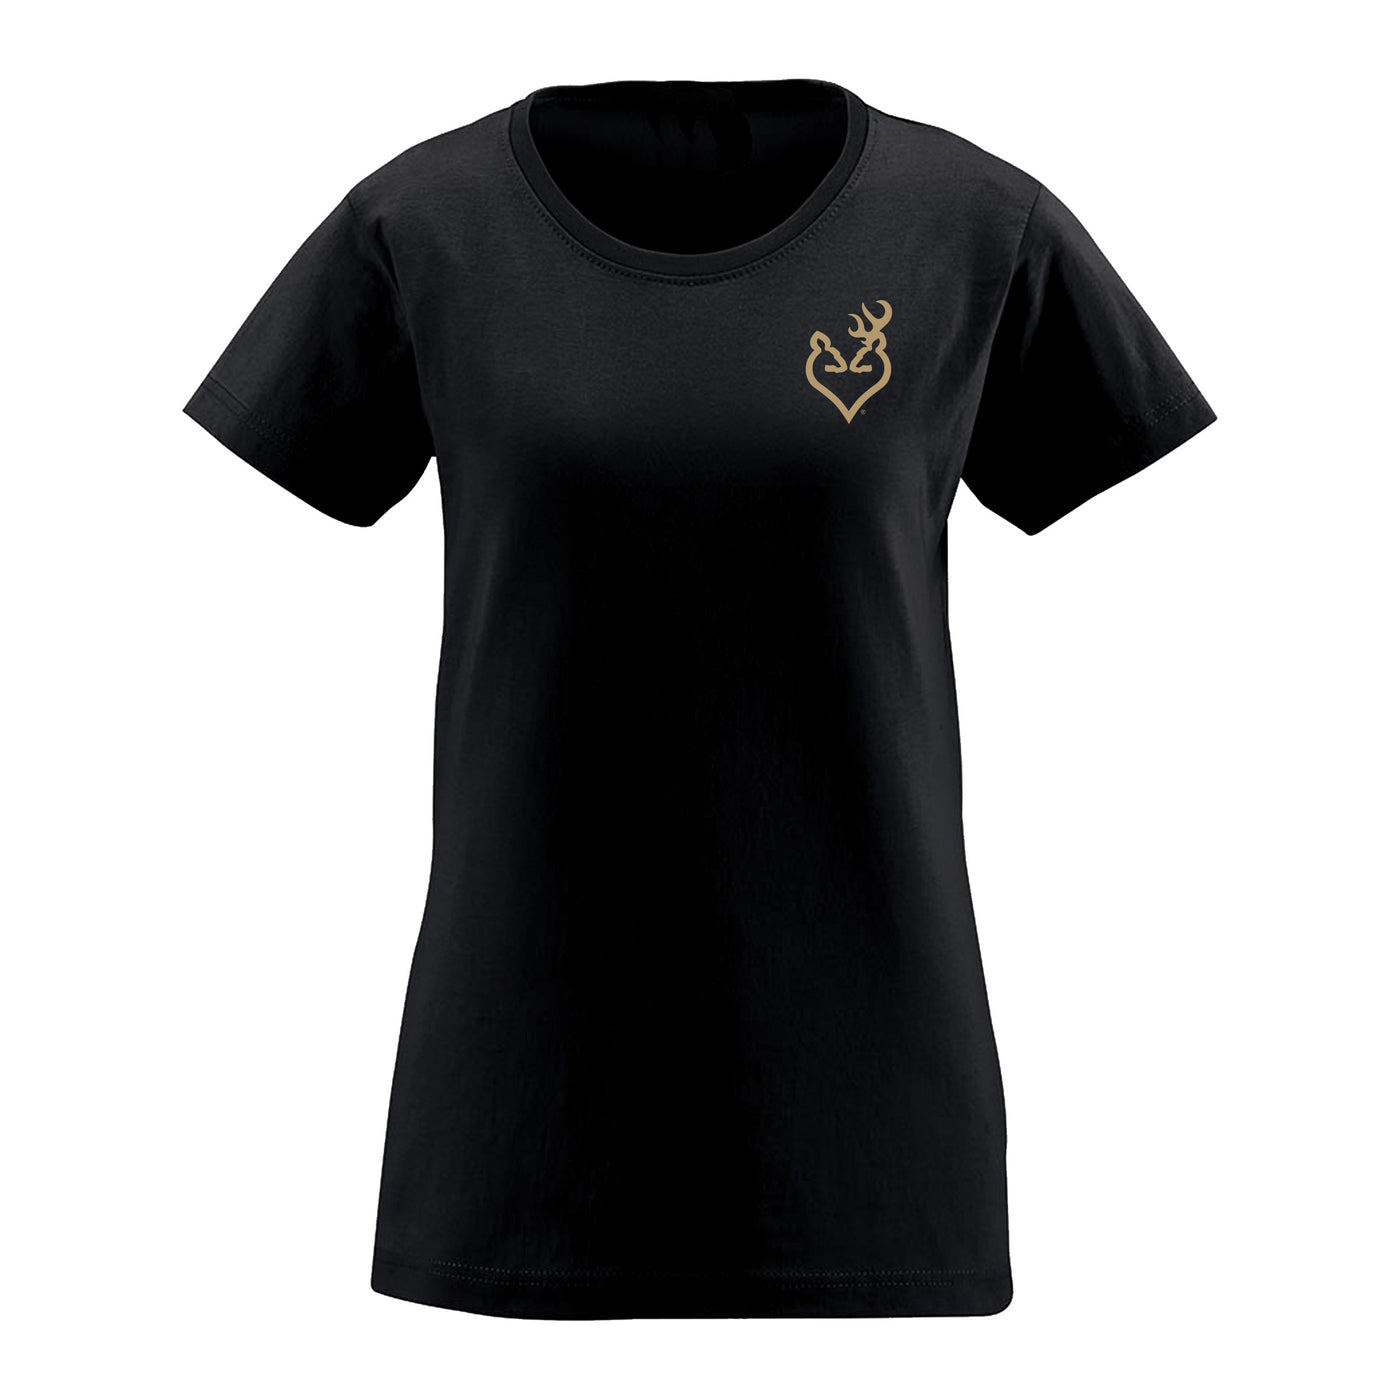 Browning “Duck” short-sleeve t-shirt for women